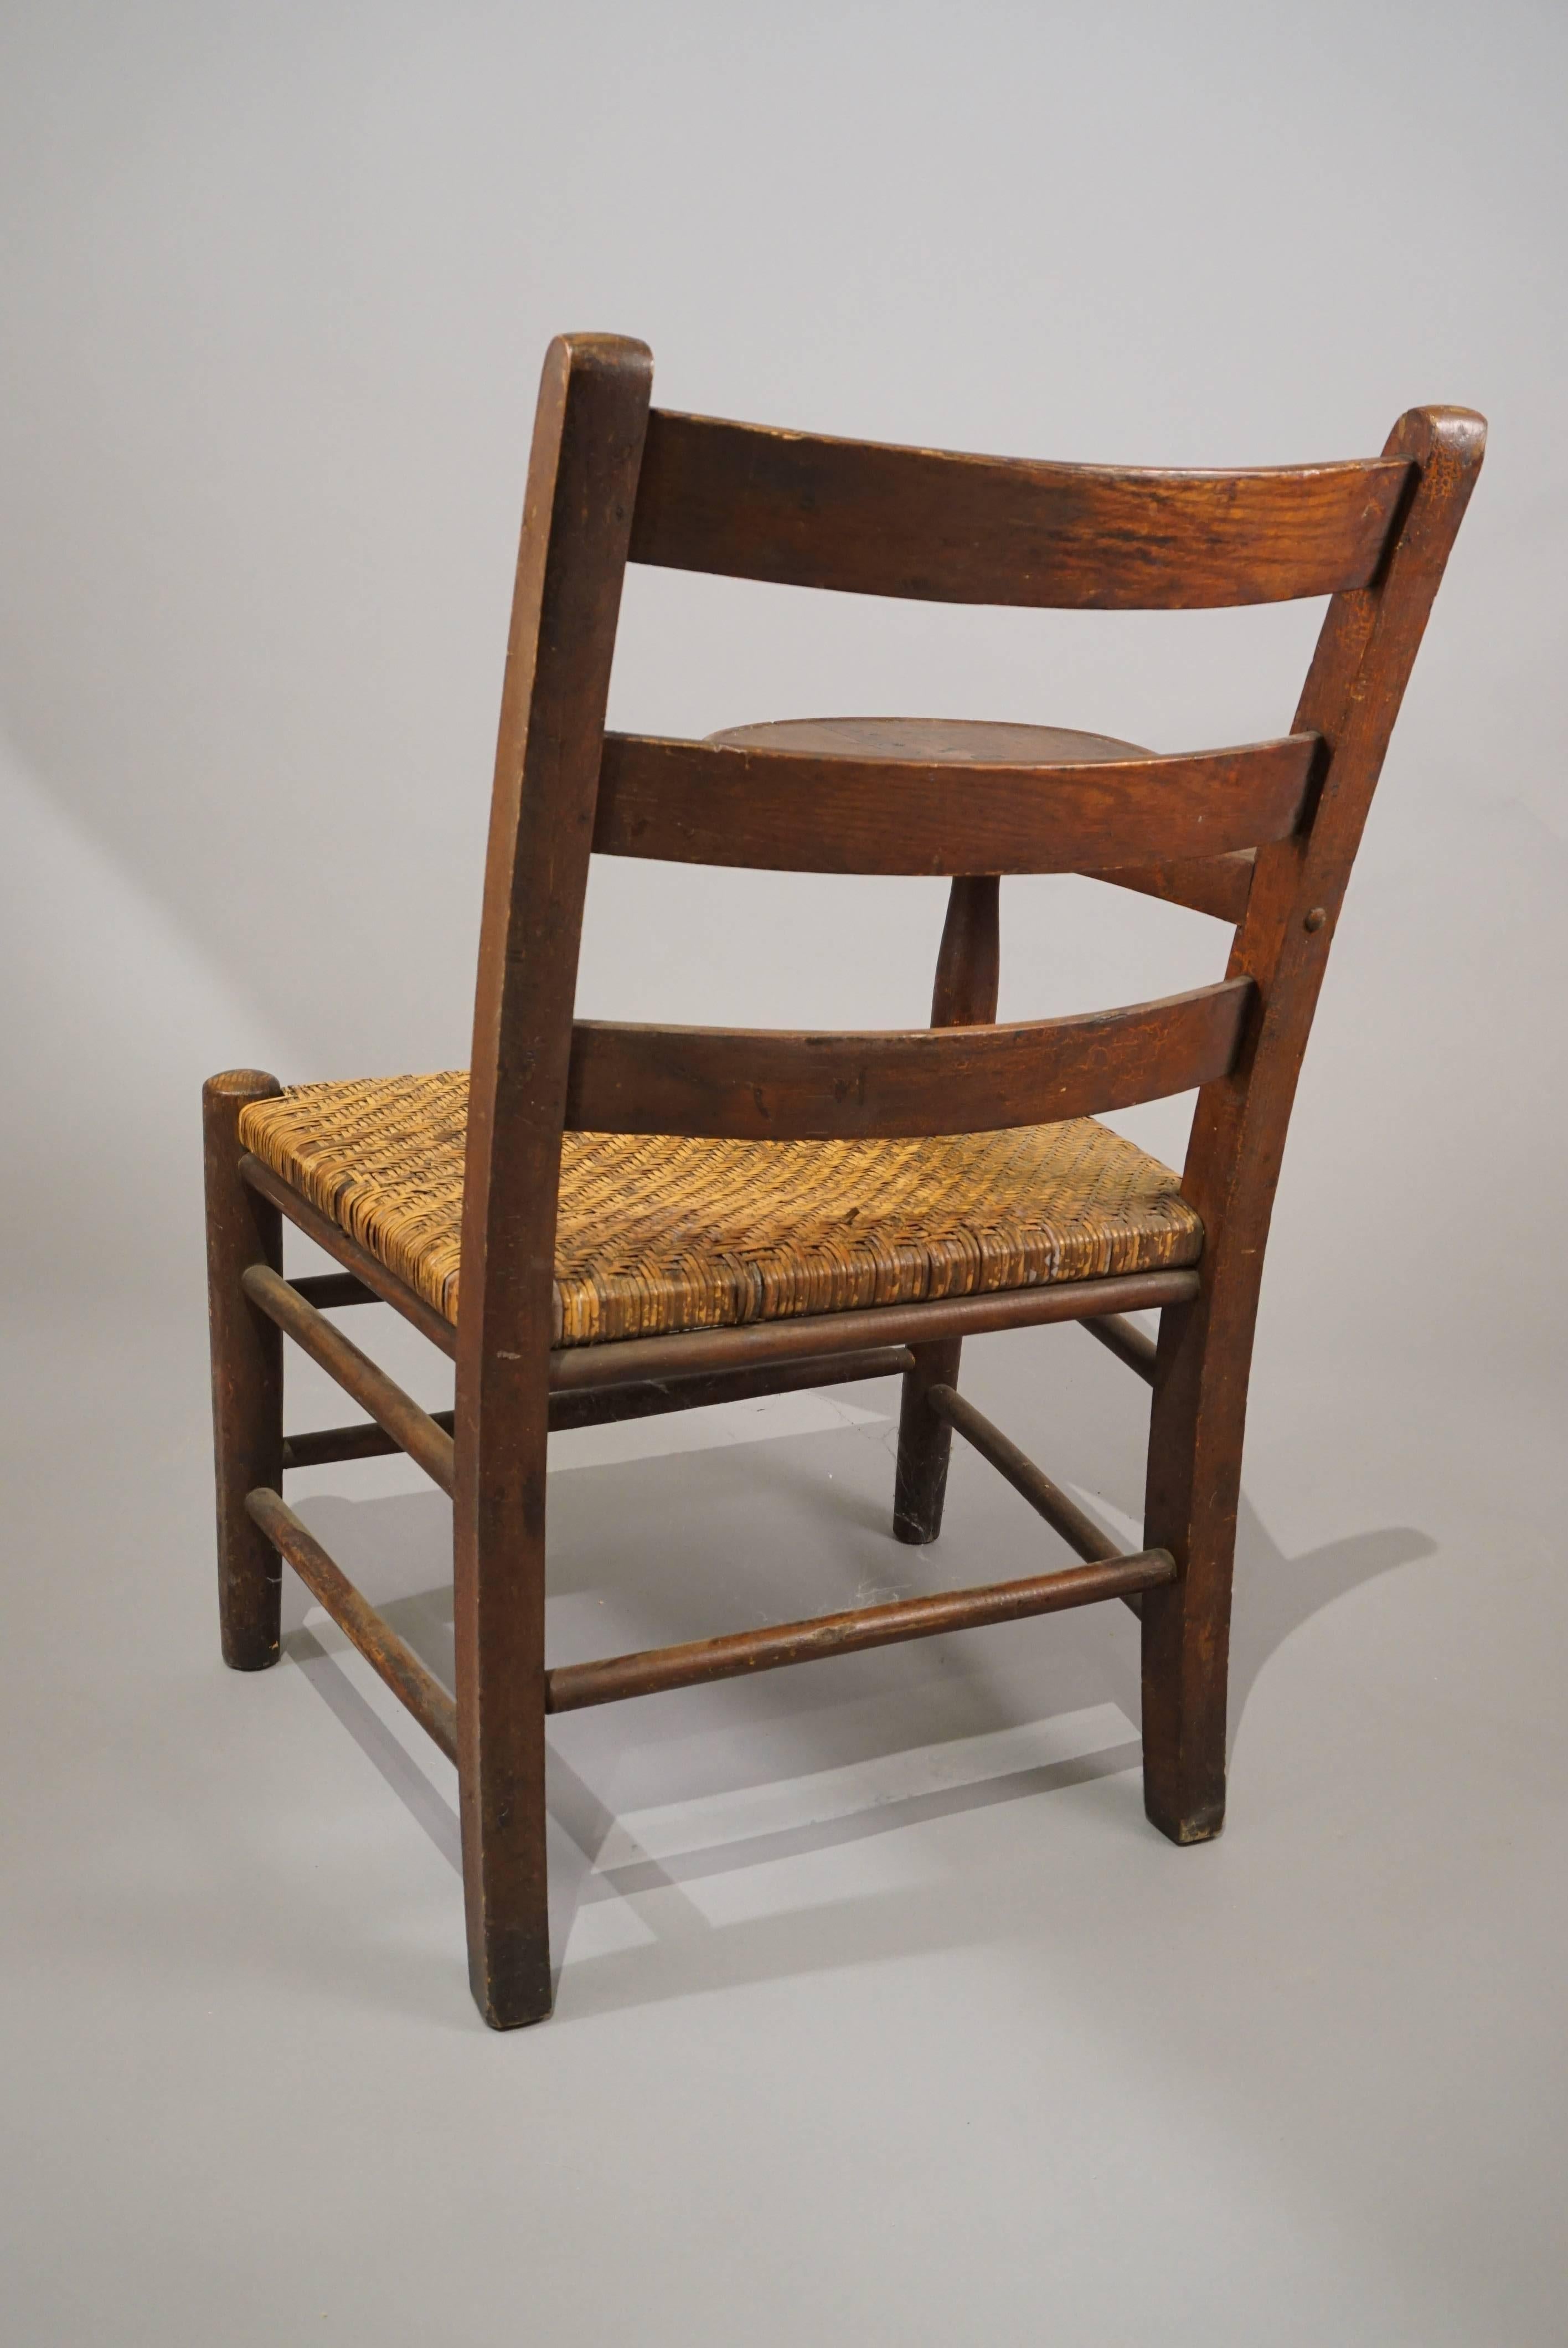 1920s Adirondack chair with a oval writing surface.
Beautiful patina. Original woven rush seat.